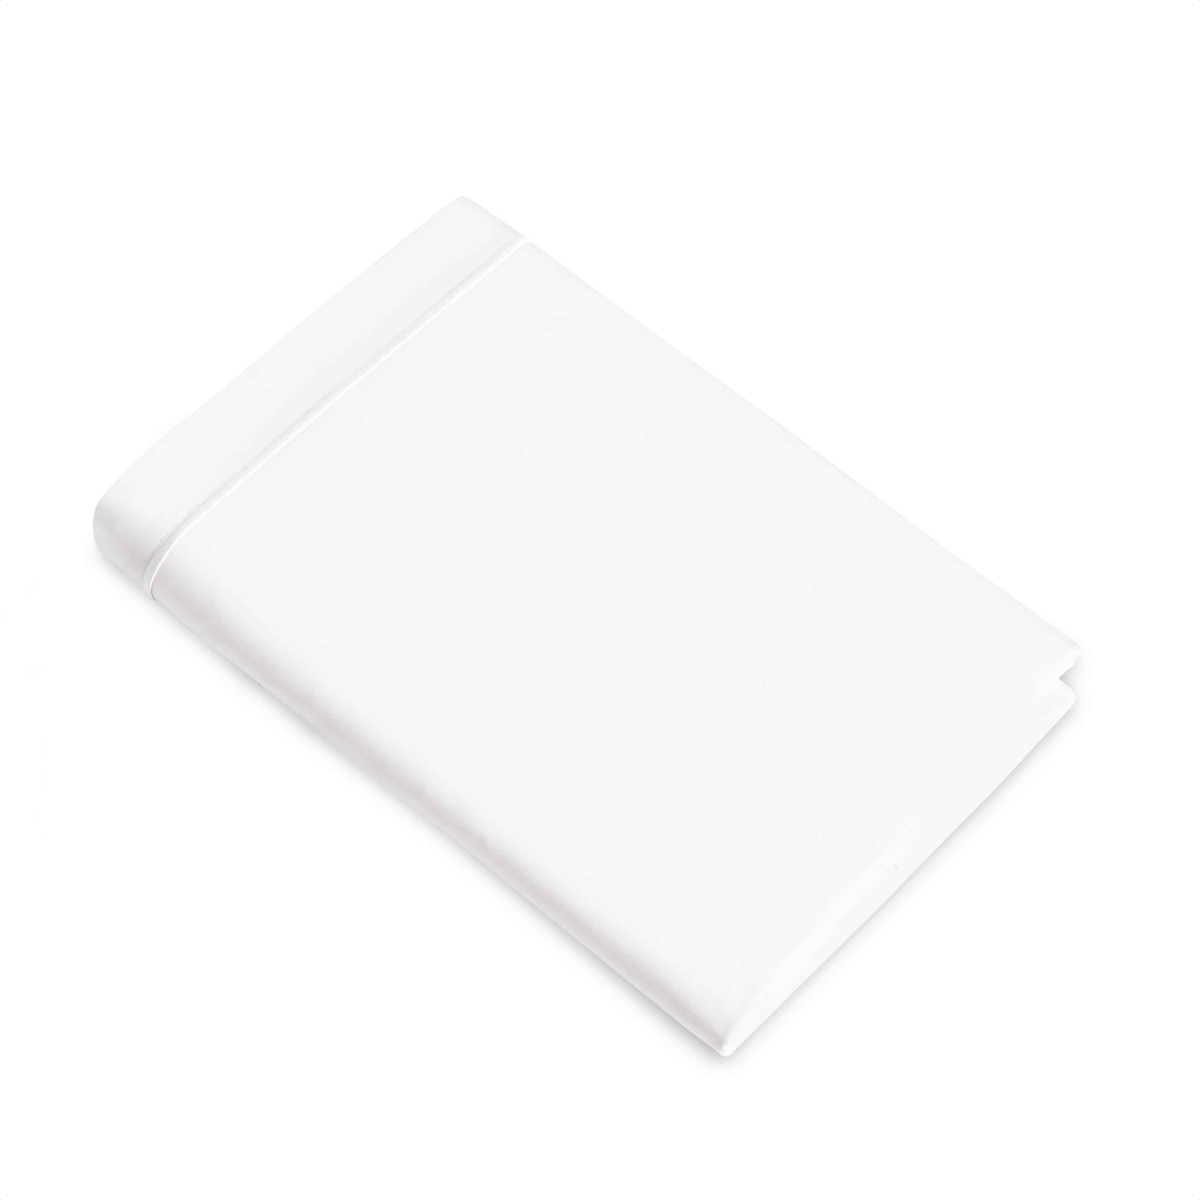 Folded Silo of Signoria Luce Bedding Duvet Cover in White Color